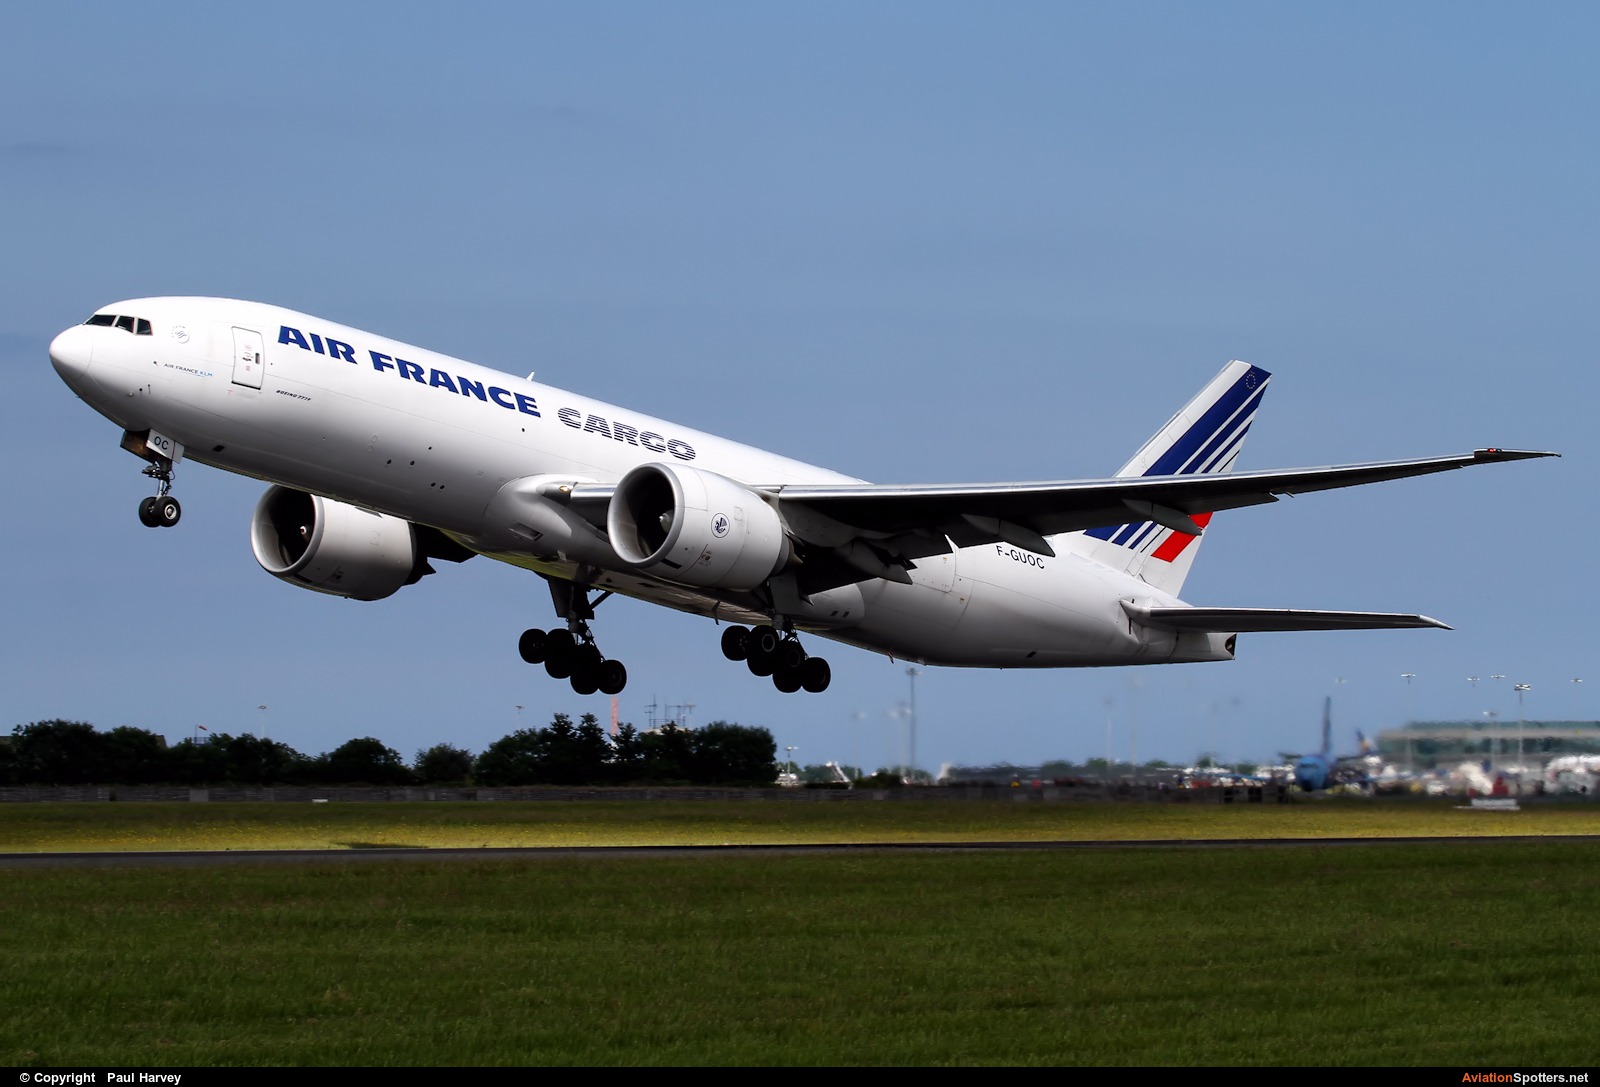 Air France Cargo  -  777-200F  (F-GUOC) By Paul Harvey (Paultojo)